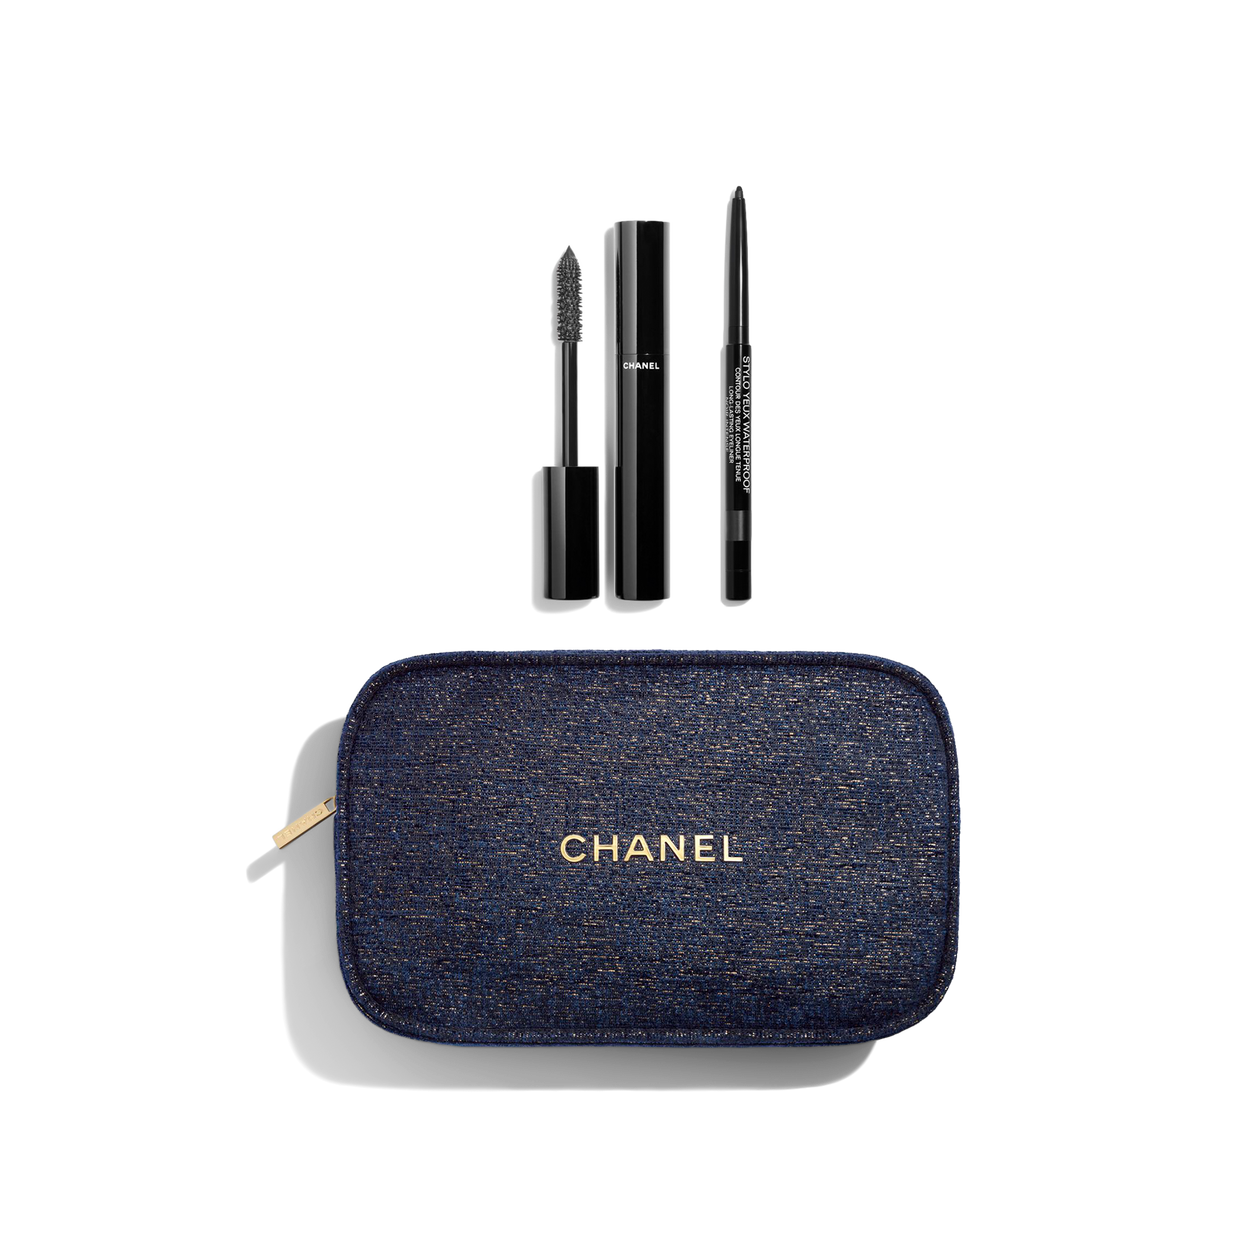 Chanel Stylo Yeux Waterproof Long-lasting Eyeliner - 88 Noir Intense By  Chanel for Women - 0.01 Ounce Eyeliner 0.01 Ounce